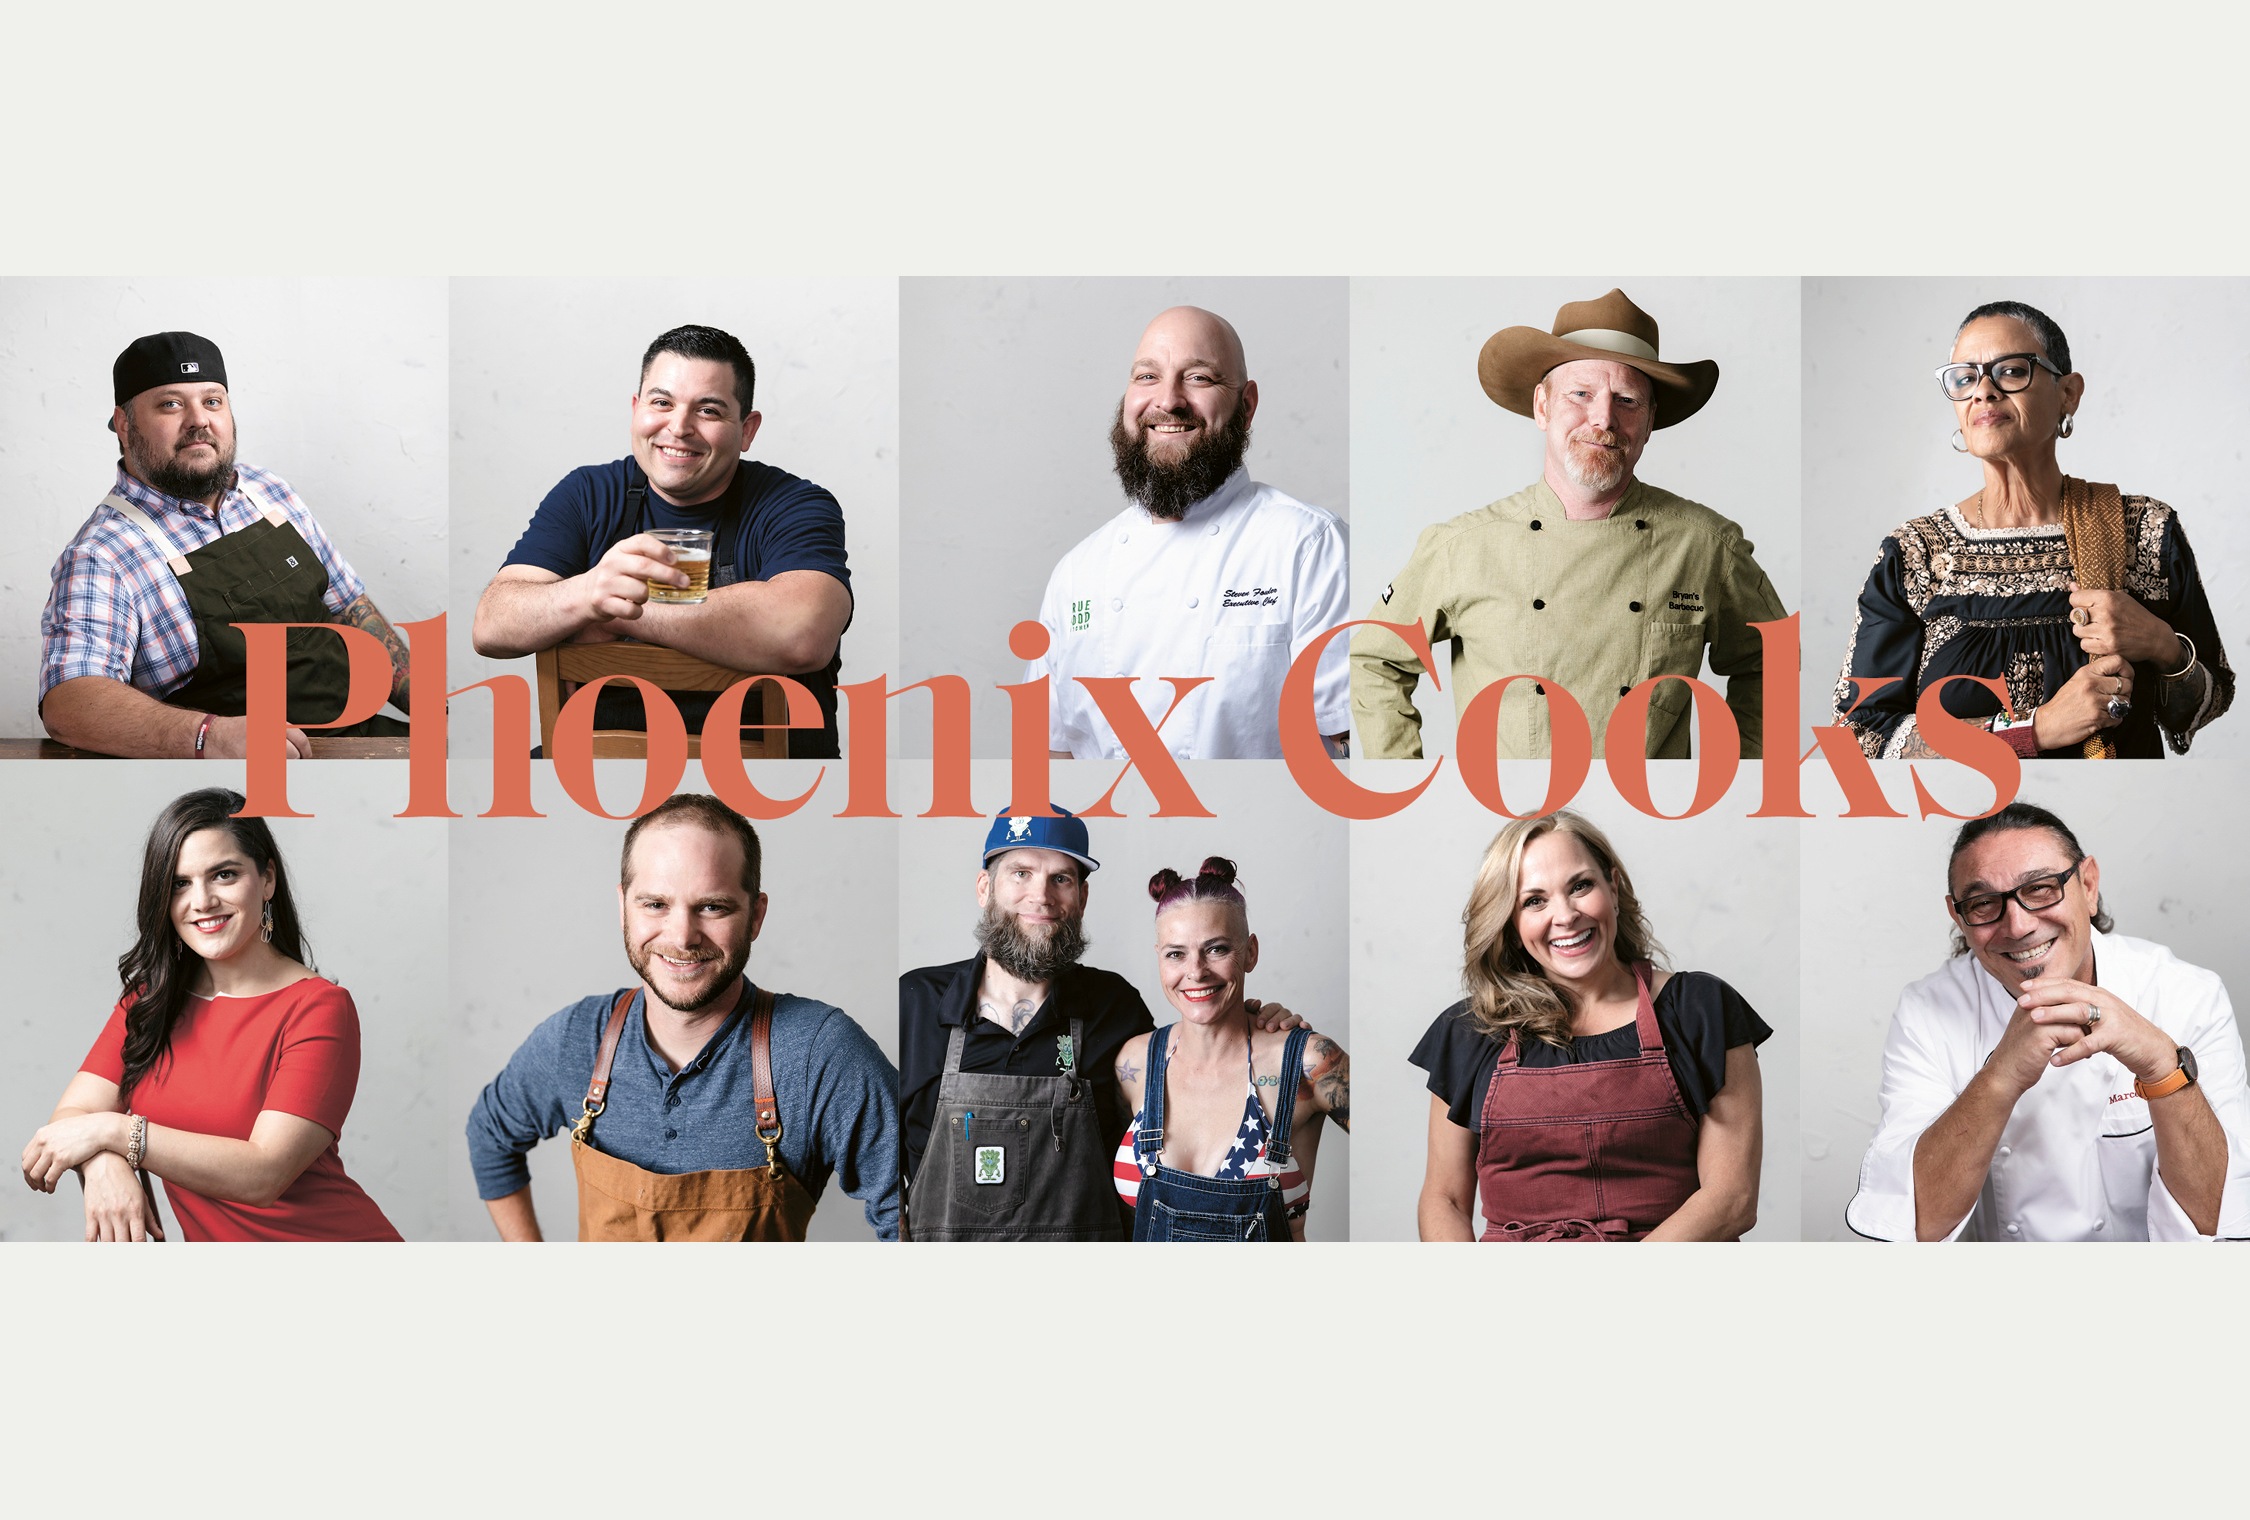 Phoenix Cooks chef portraits